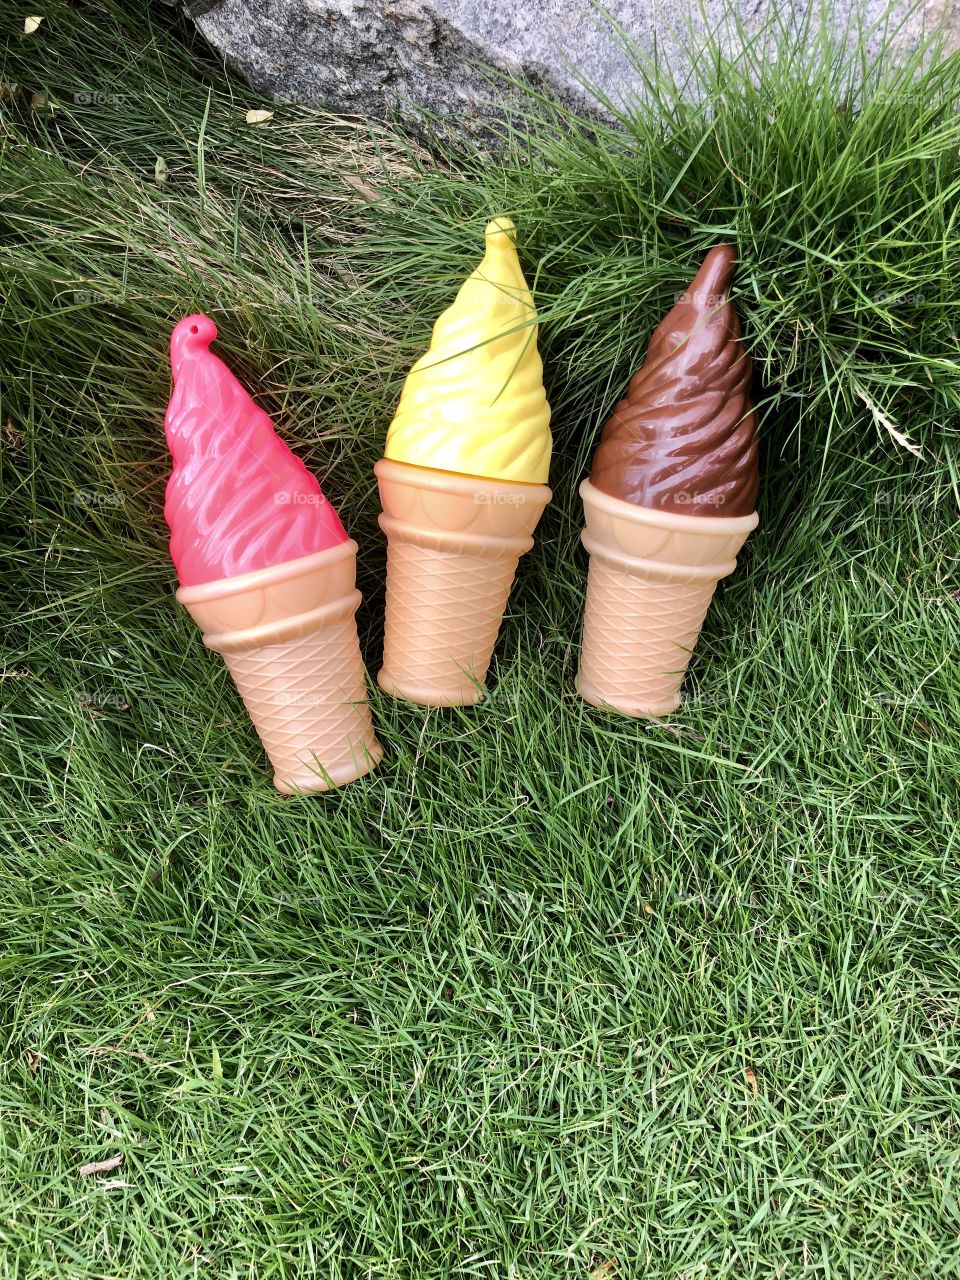 Ice cream toy on the grass